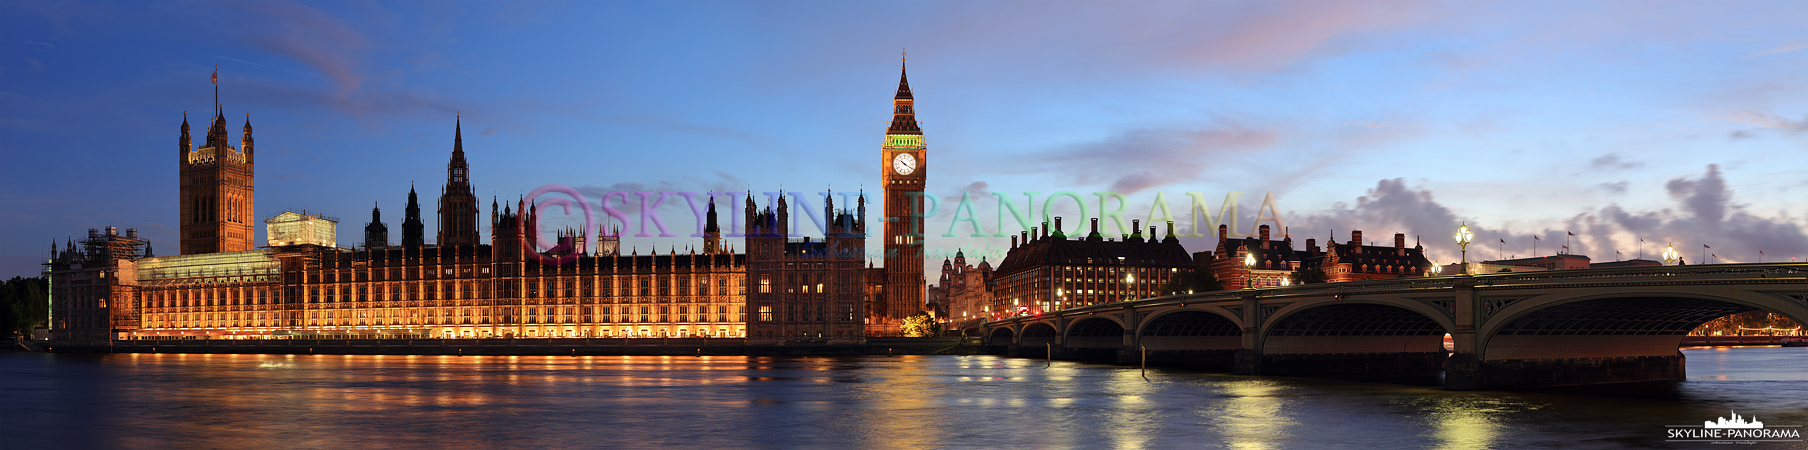 Palace of Westminster – London Panorama (p_00820)